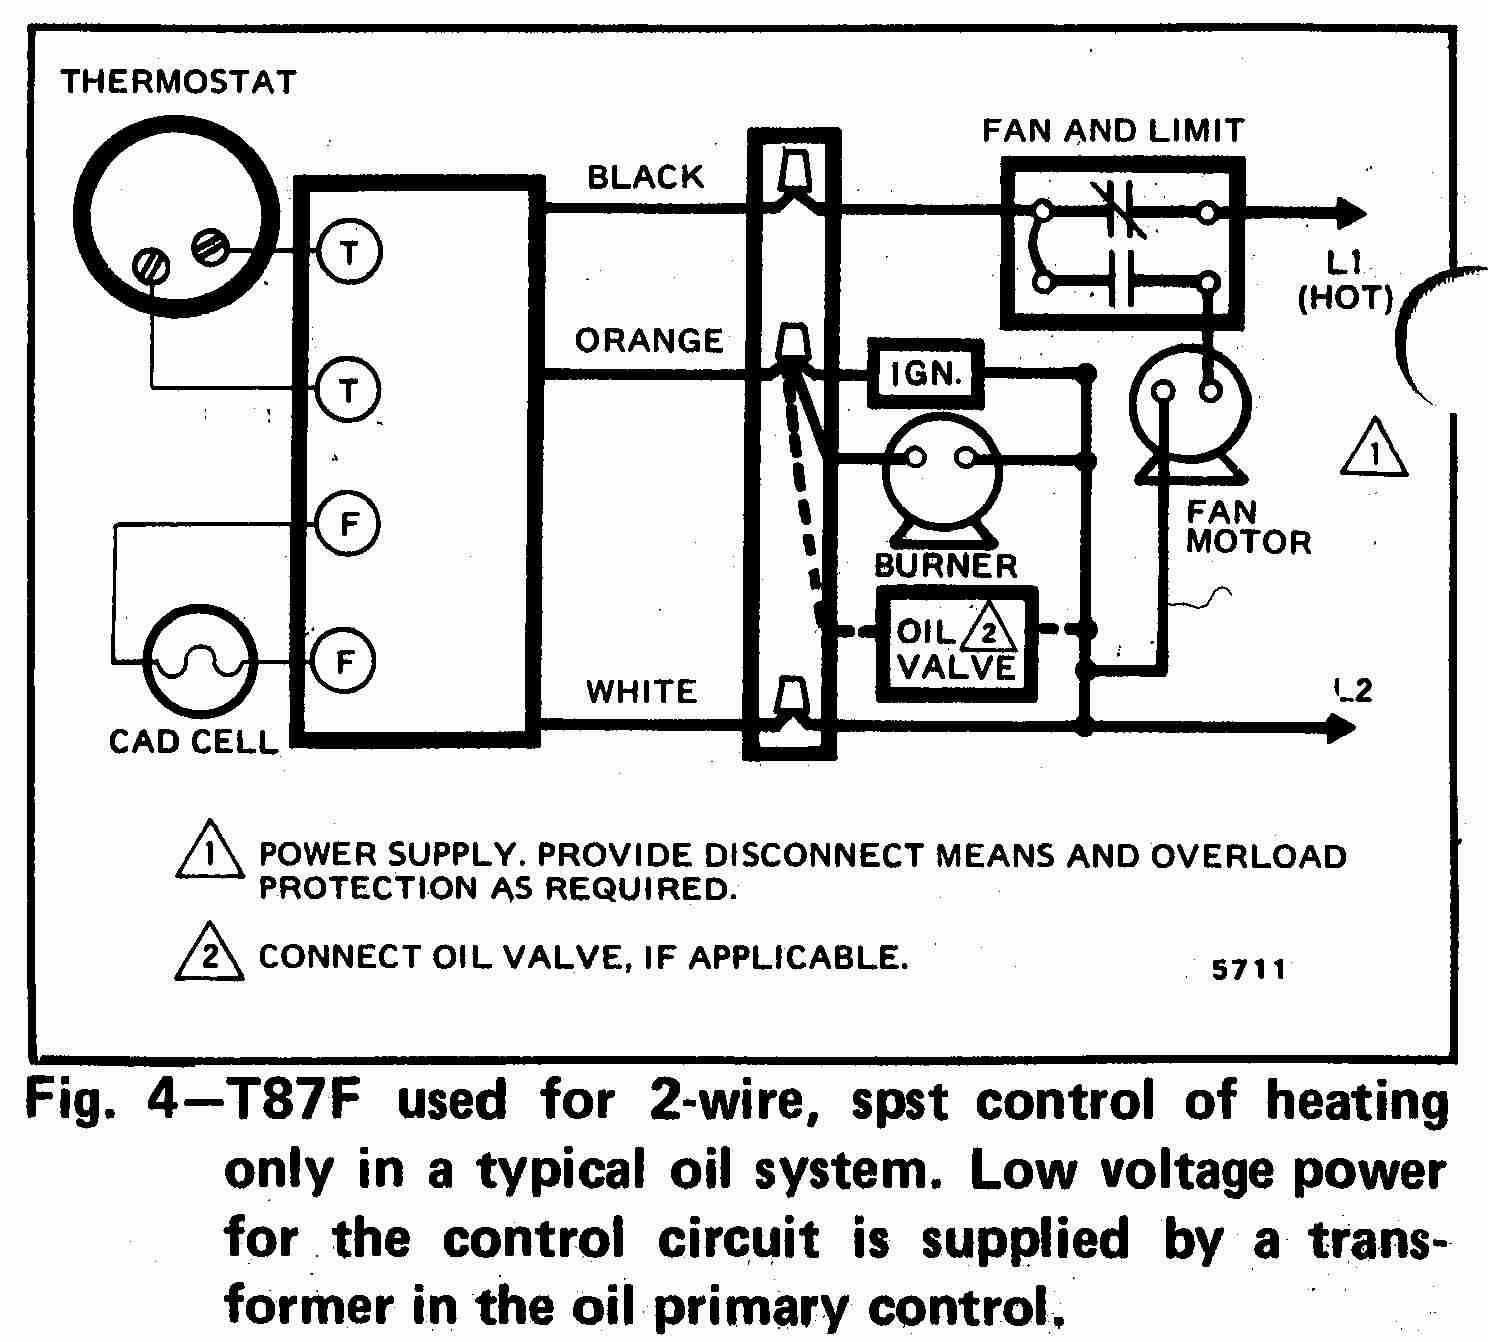 Honeywell S8610u Wiring Diagram Lovely Chromalox Heater Wiring Diagram 76 Honeywell S8610u Wiring